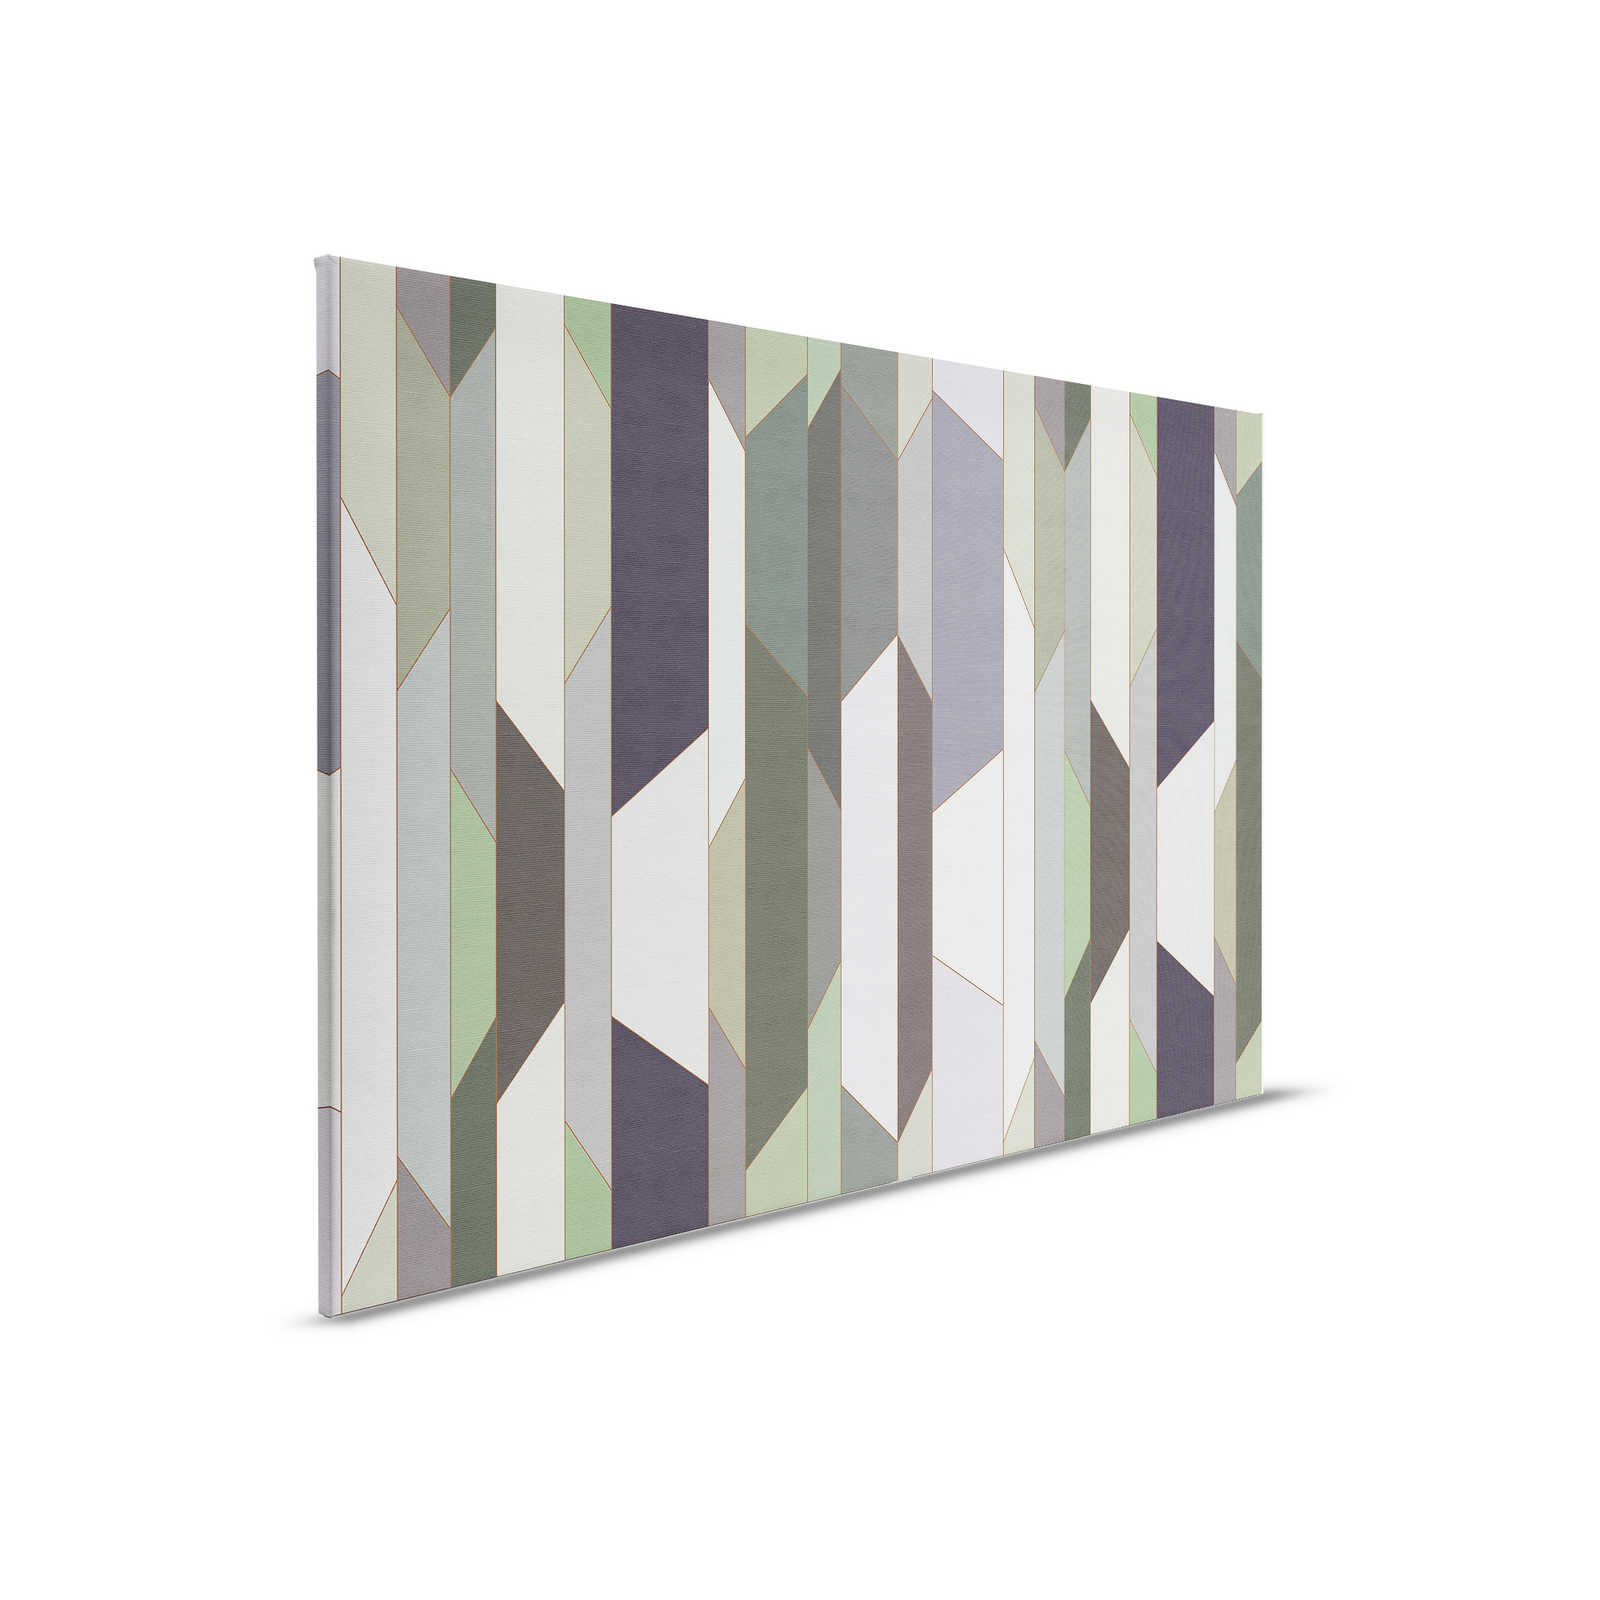         Fold 1 - Leinwandbild mit Streifendesign im Retro Stil – 0,90 m x 0,60 m
    